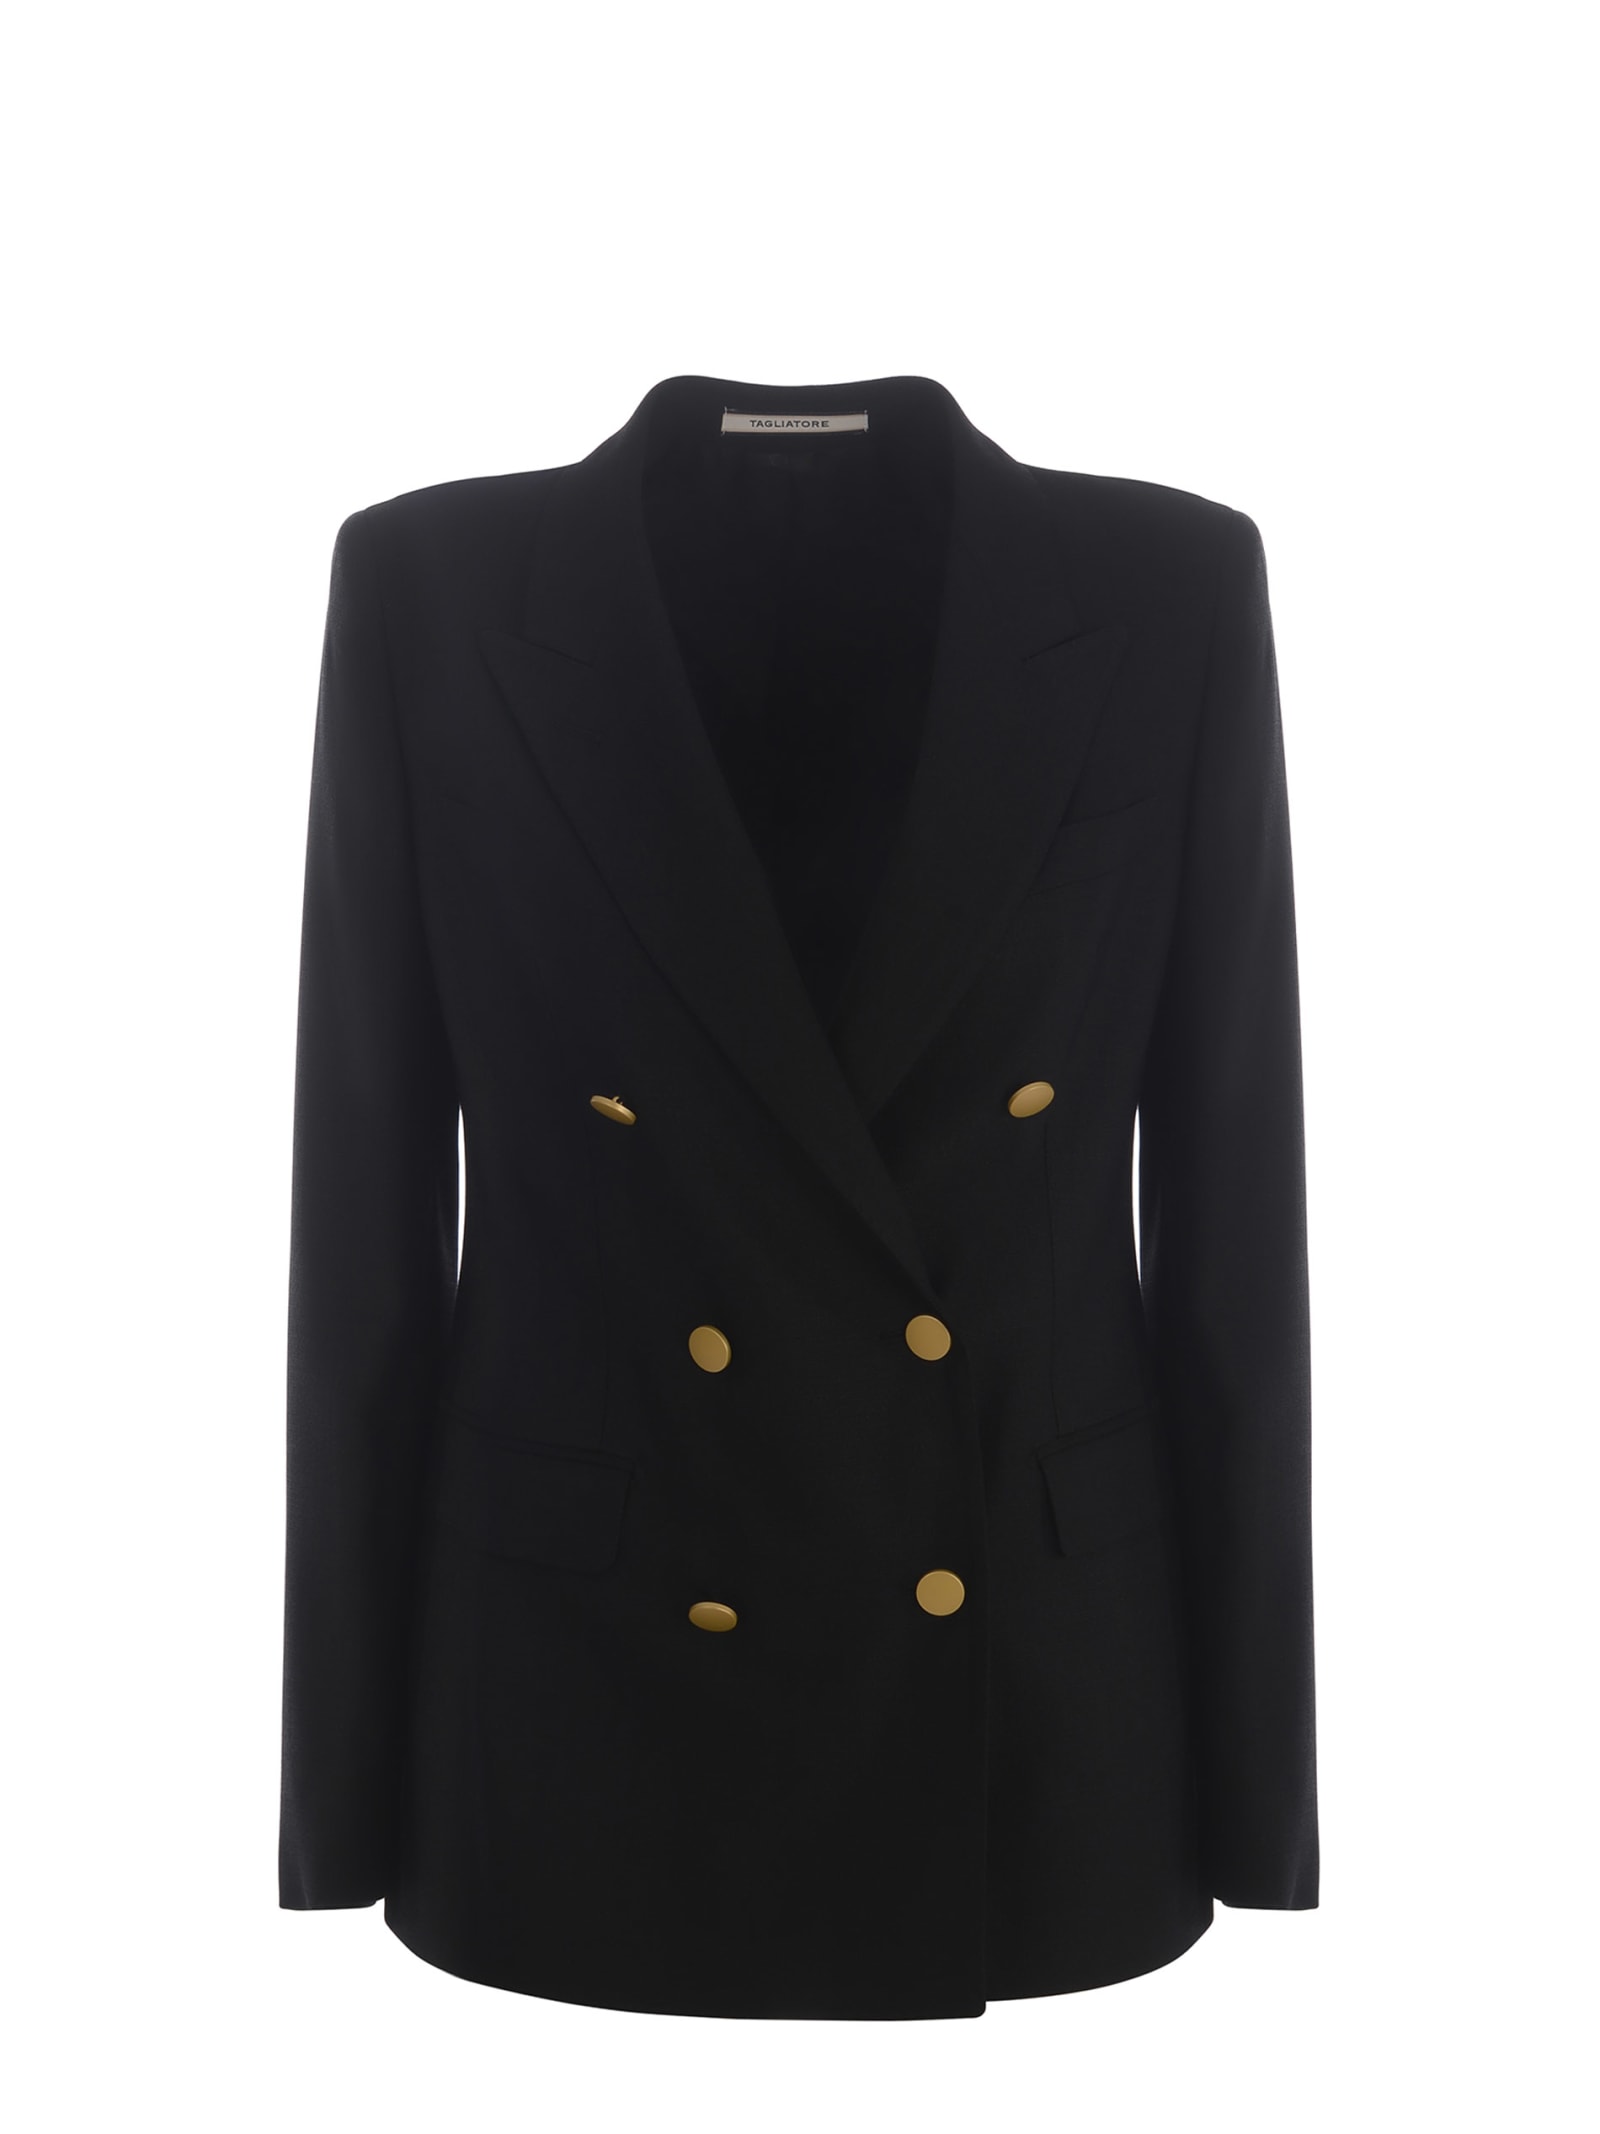 Tagliatore Double-breasted Jacket  J-parigi Made Of Viscose Blend In Black